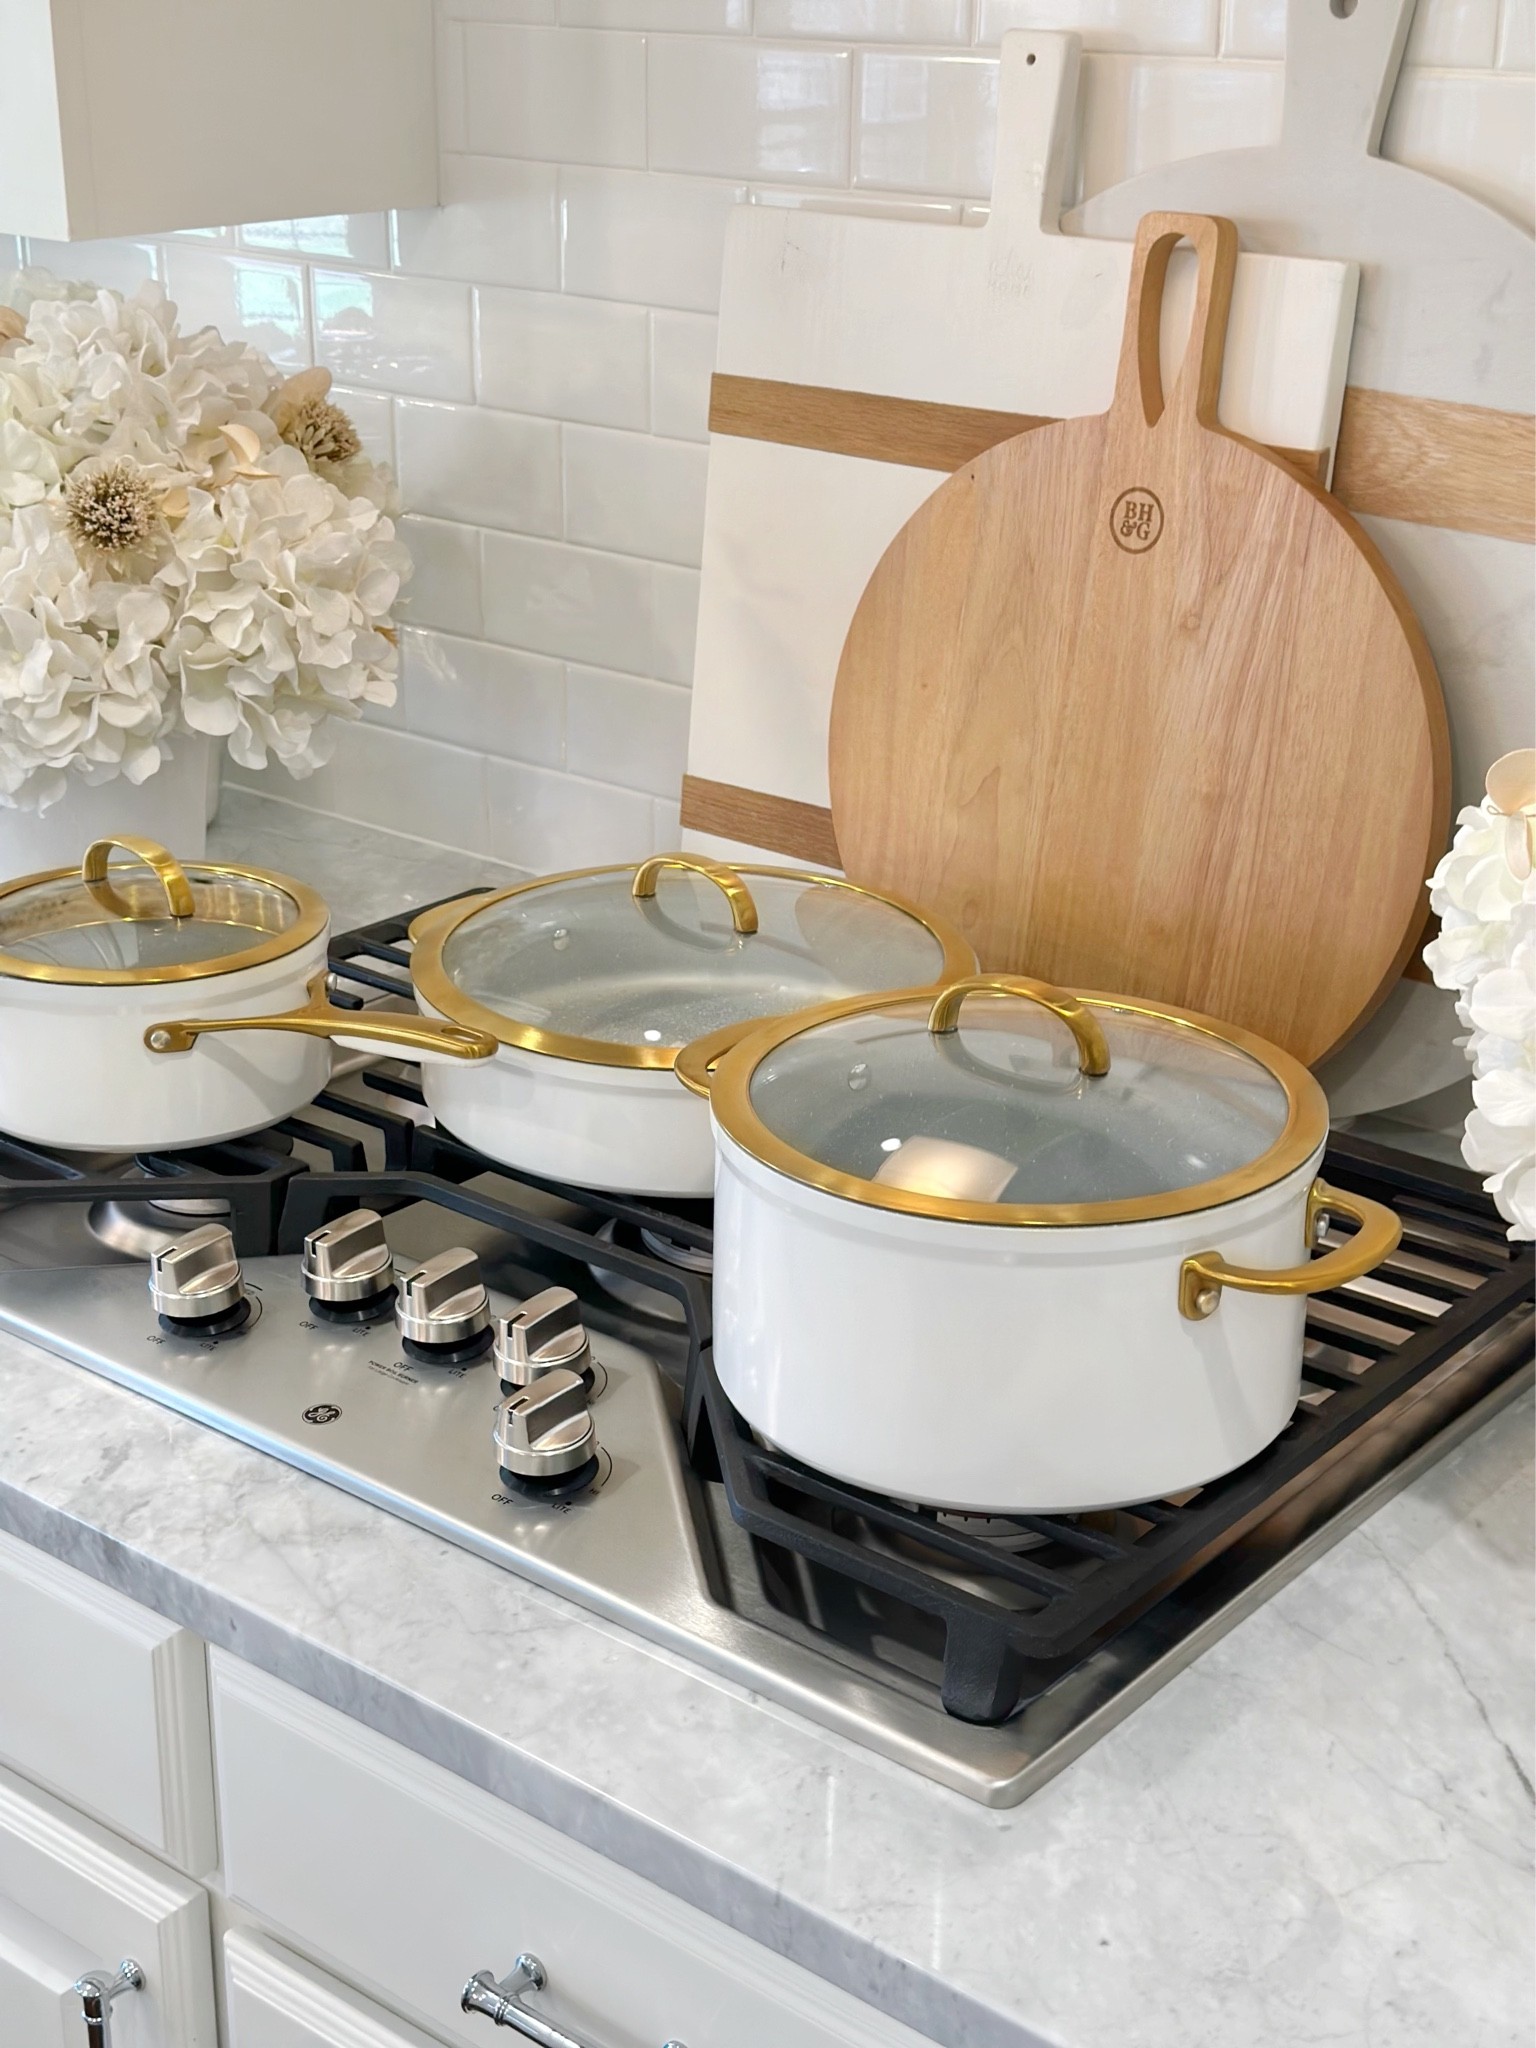 12-Piece Nonstick Cookware Set, Supreme Series, Cream – Thyme&Table